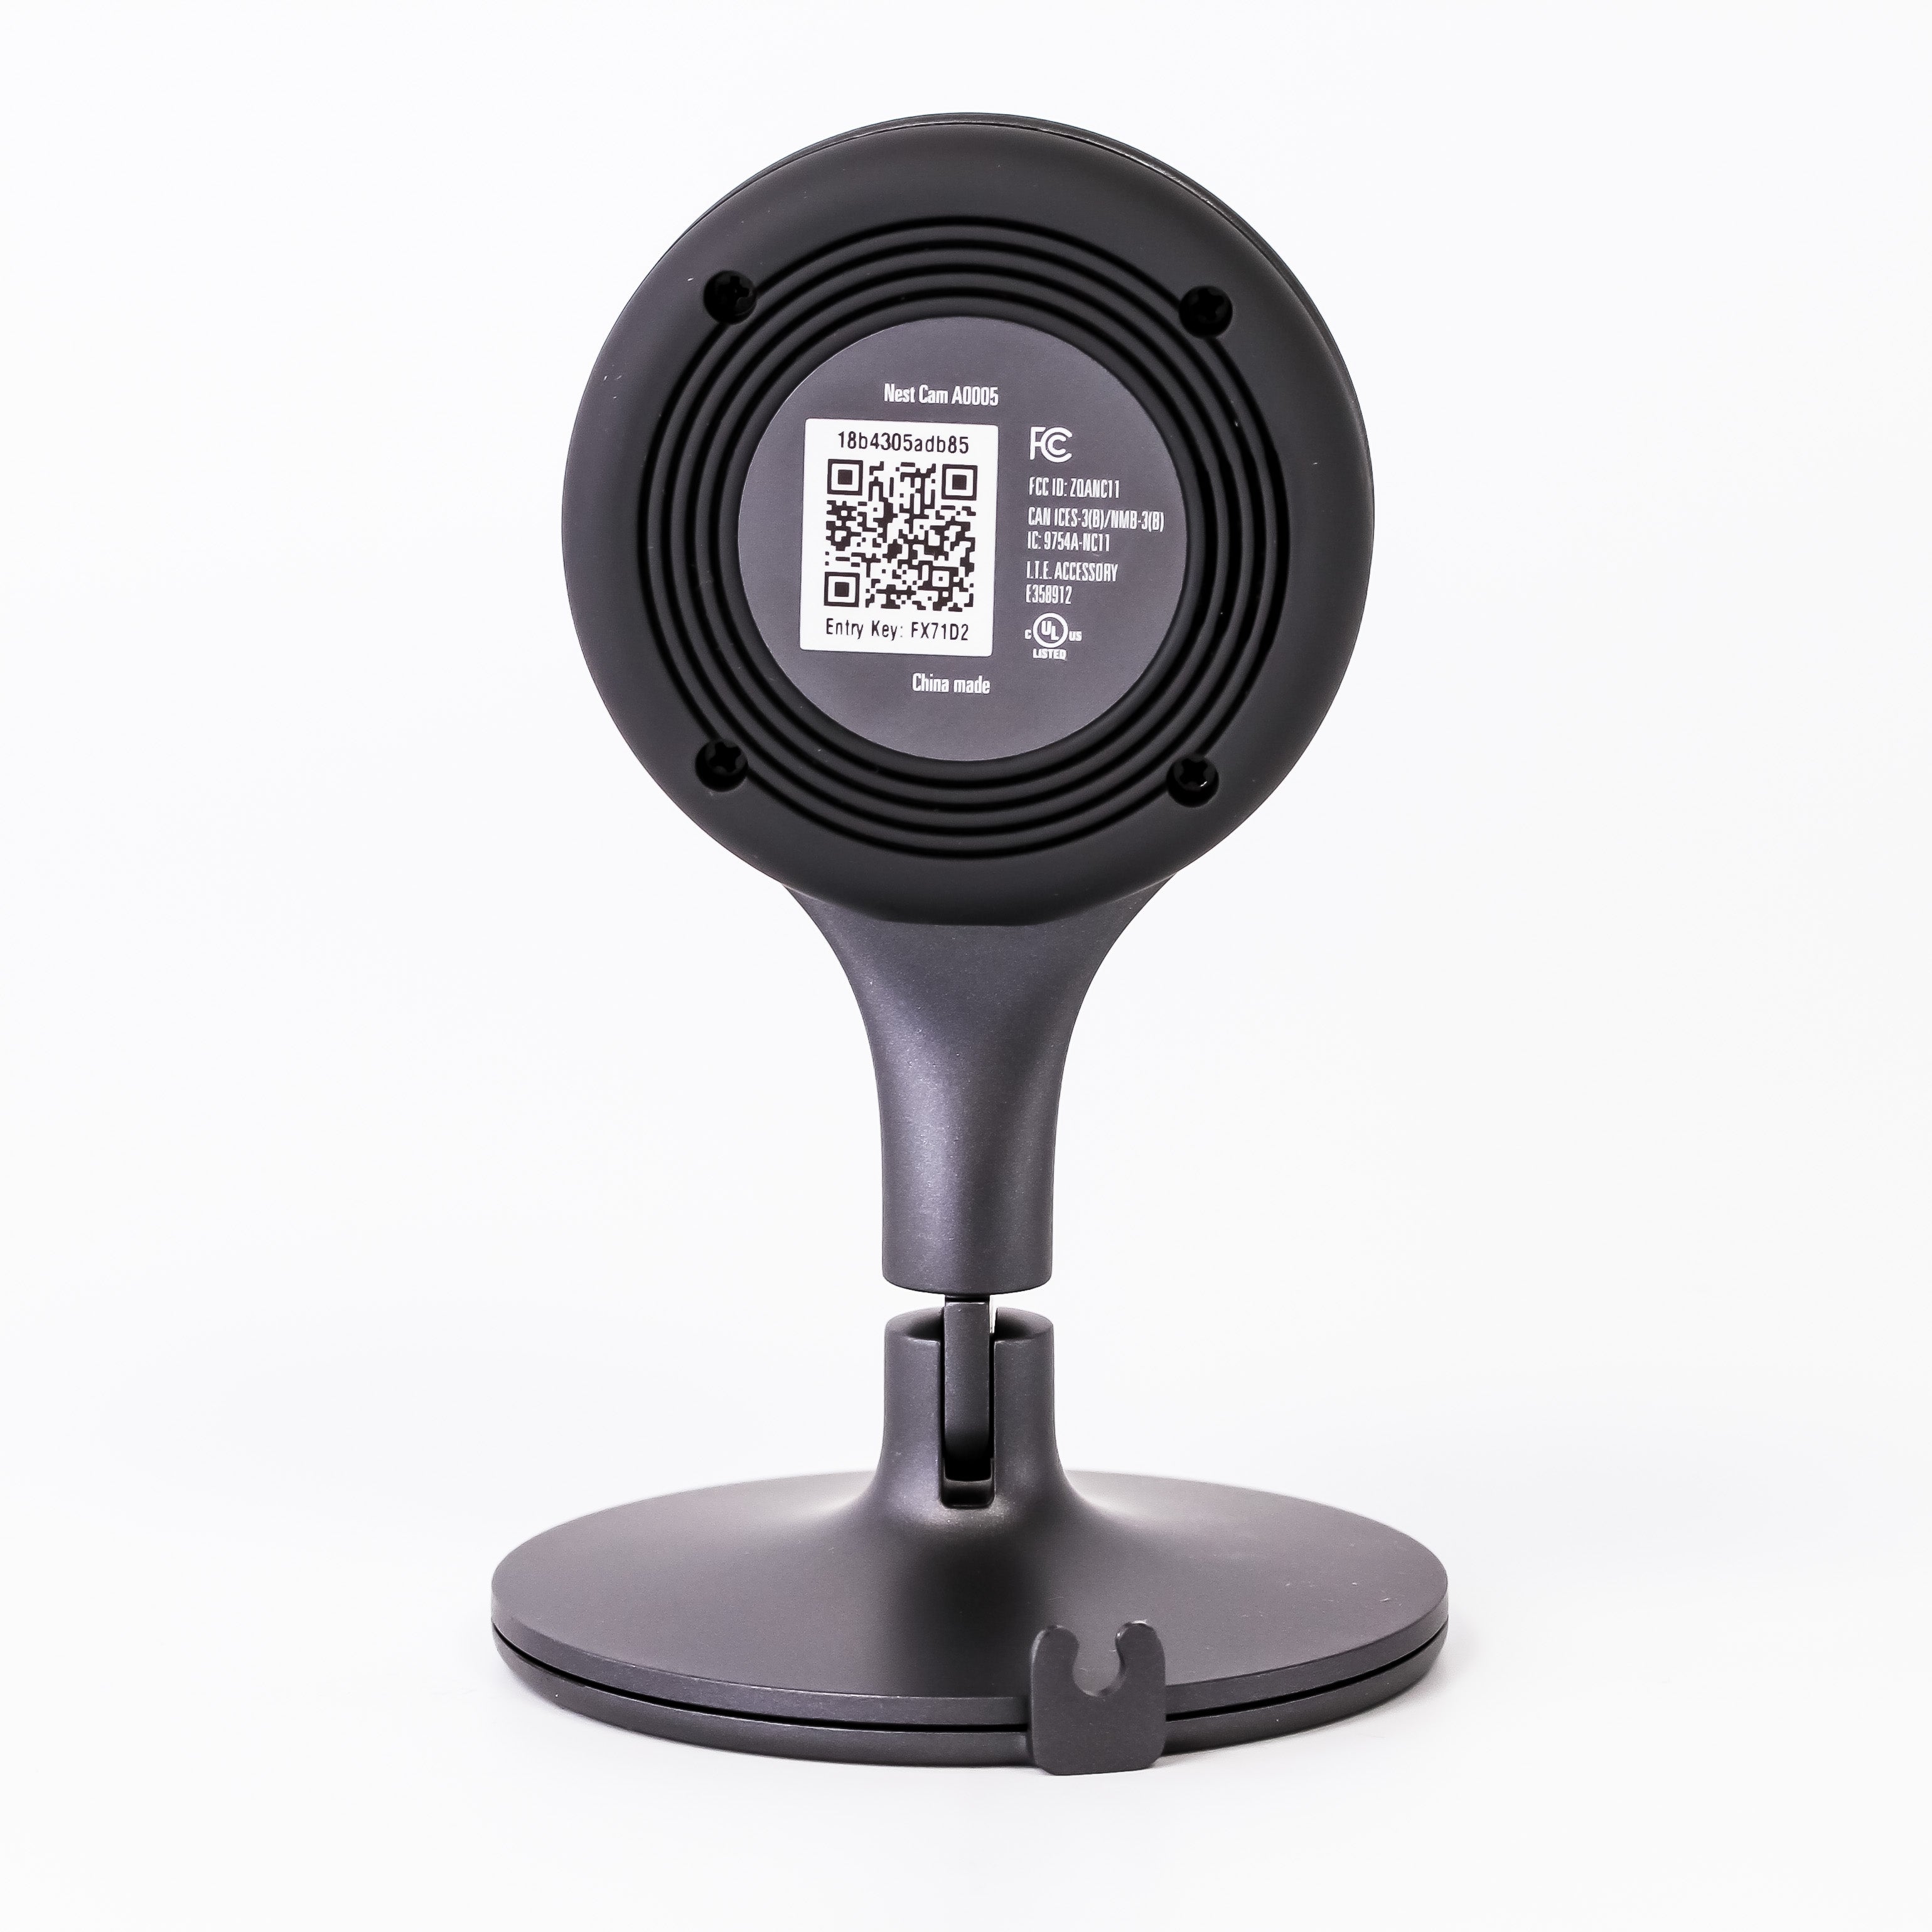 Google Nest Cam Indoor Security Camera w/ Amazon Alexa - Black (Refurbished)